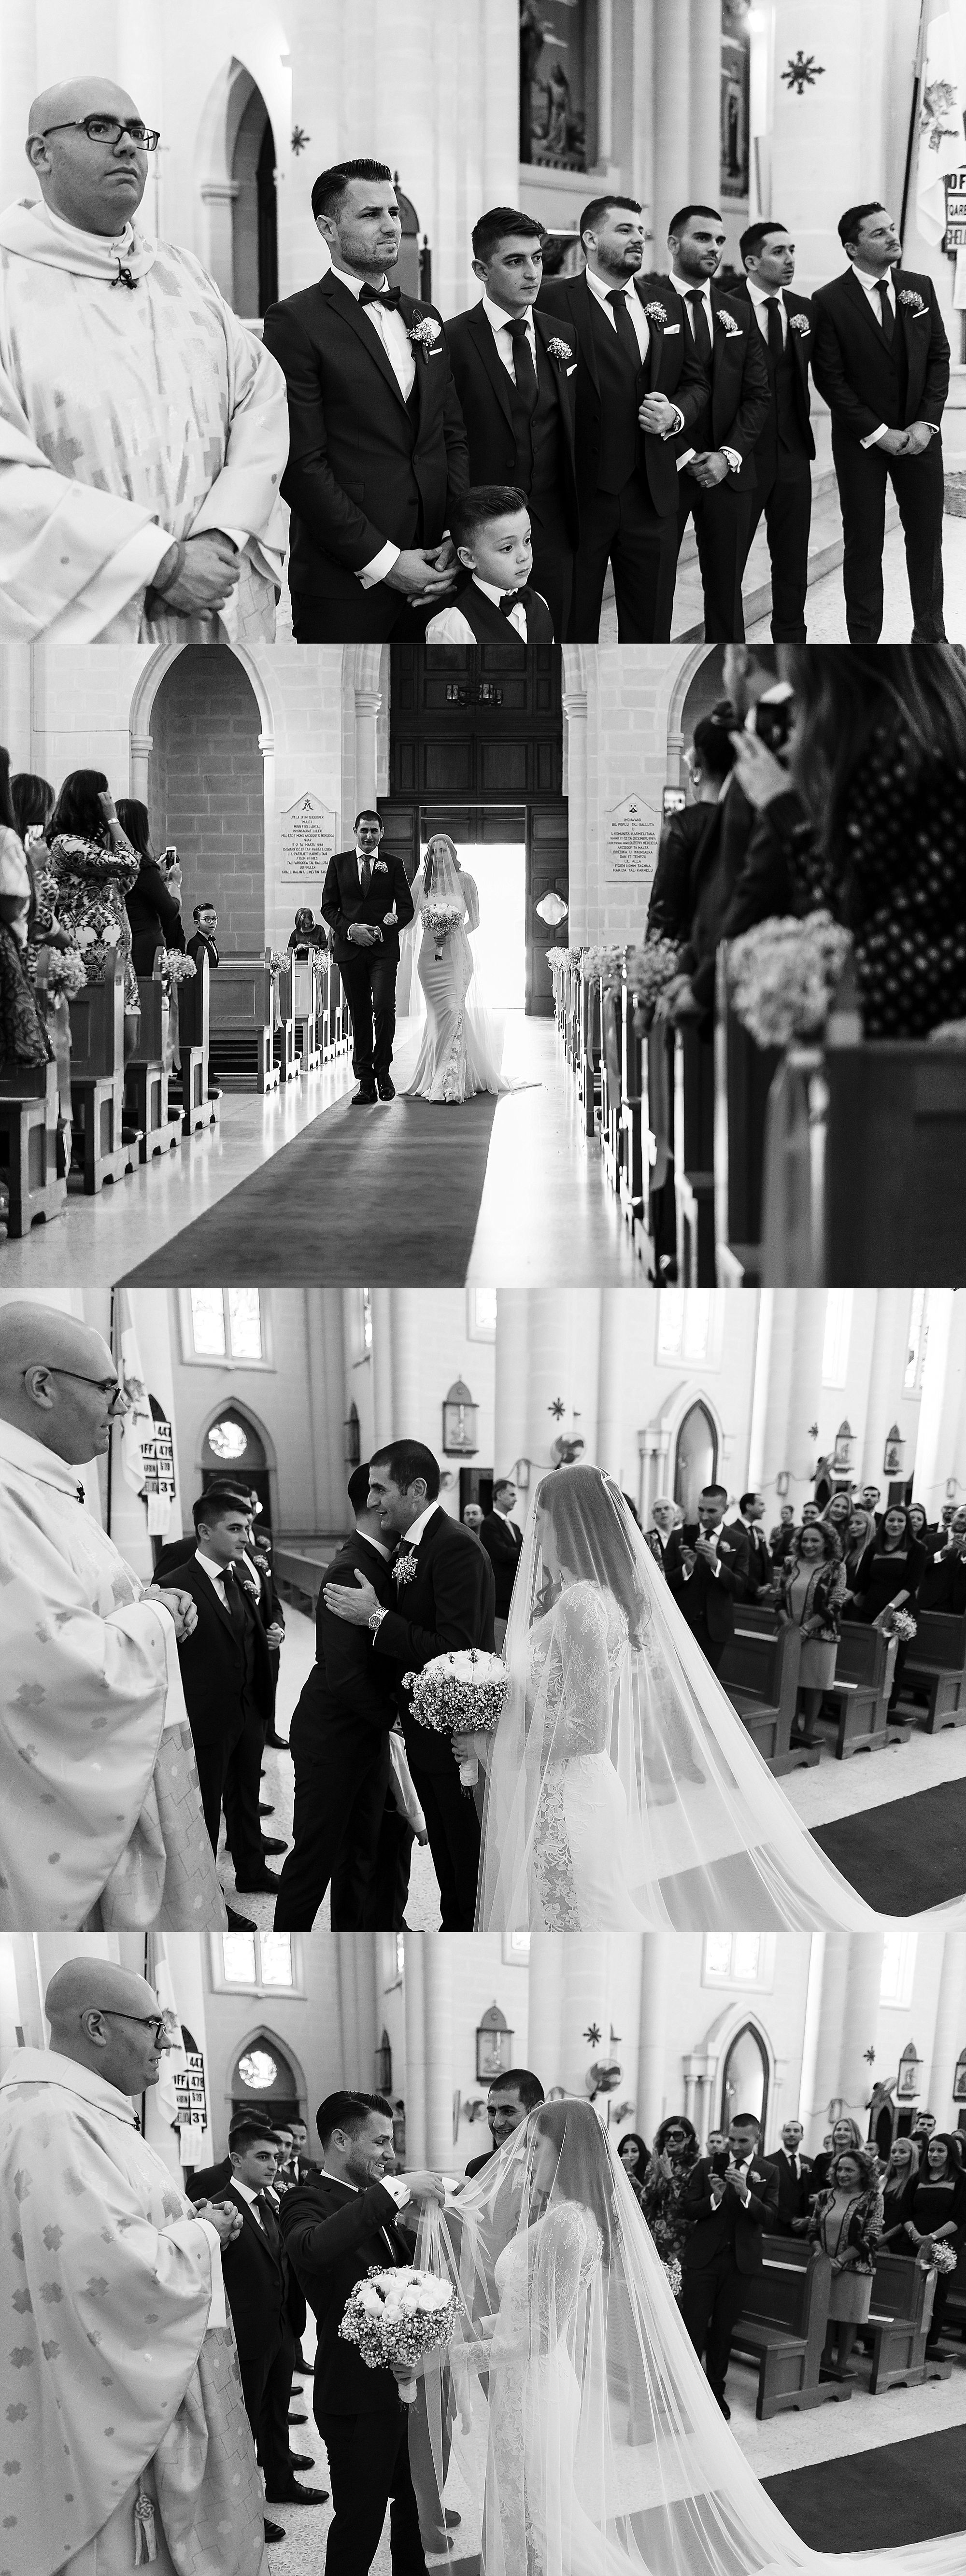 Kristina & Ben Camille - Buddhamann Corinthia - Wedding Photography Malta - Shane P. Watts